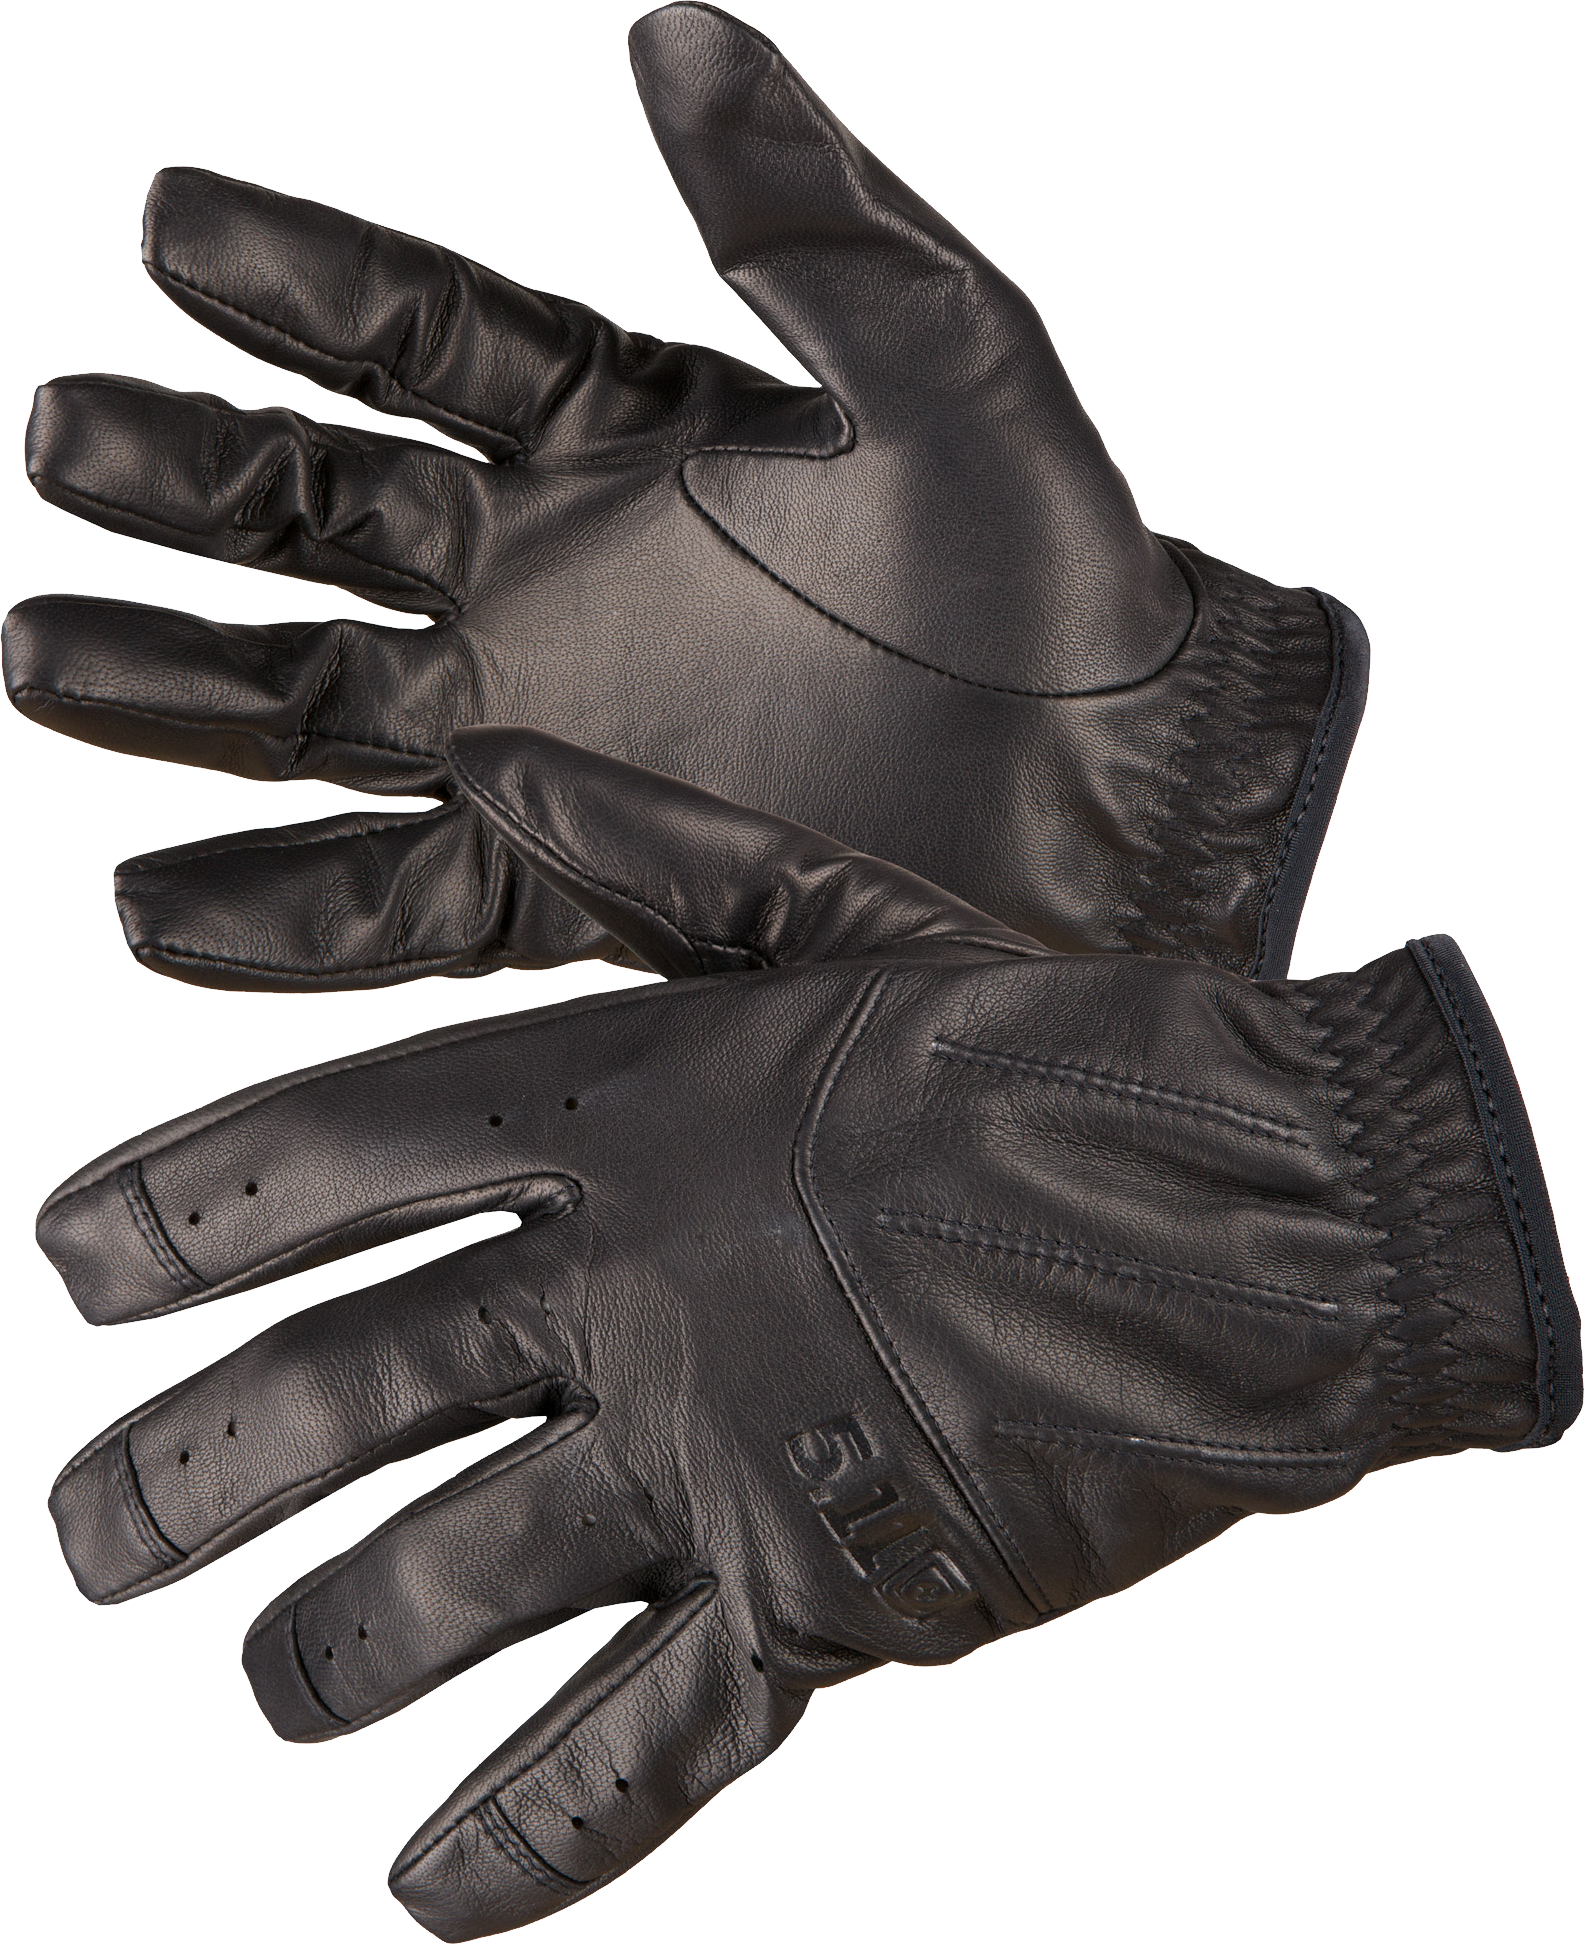 Black Leather Gloves Png Image - Gloves, Transparent background PNG HD thumbnail